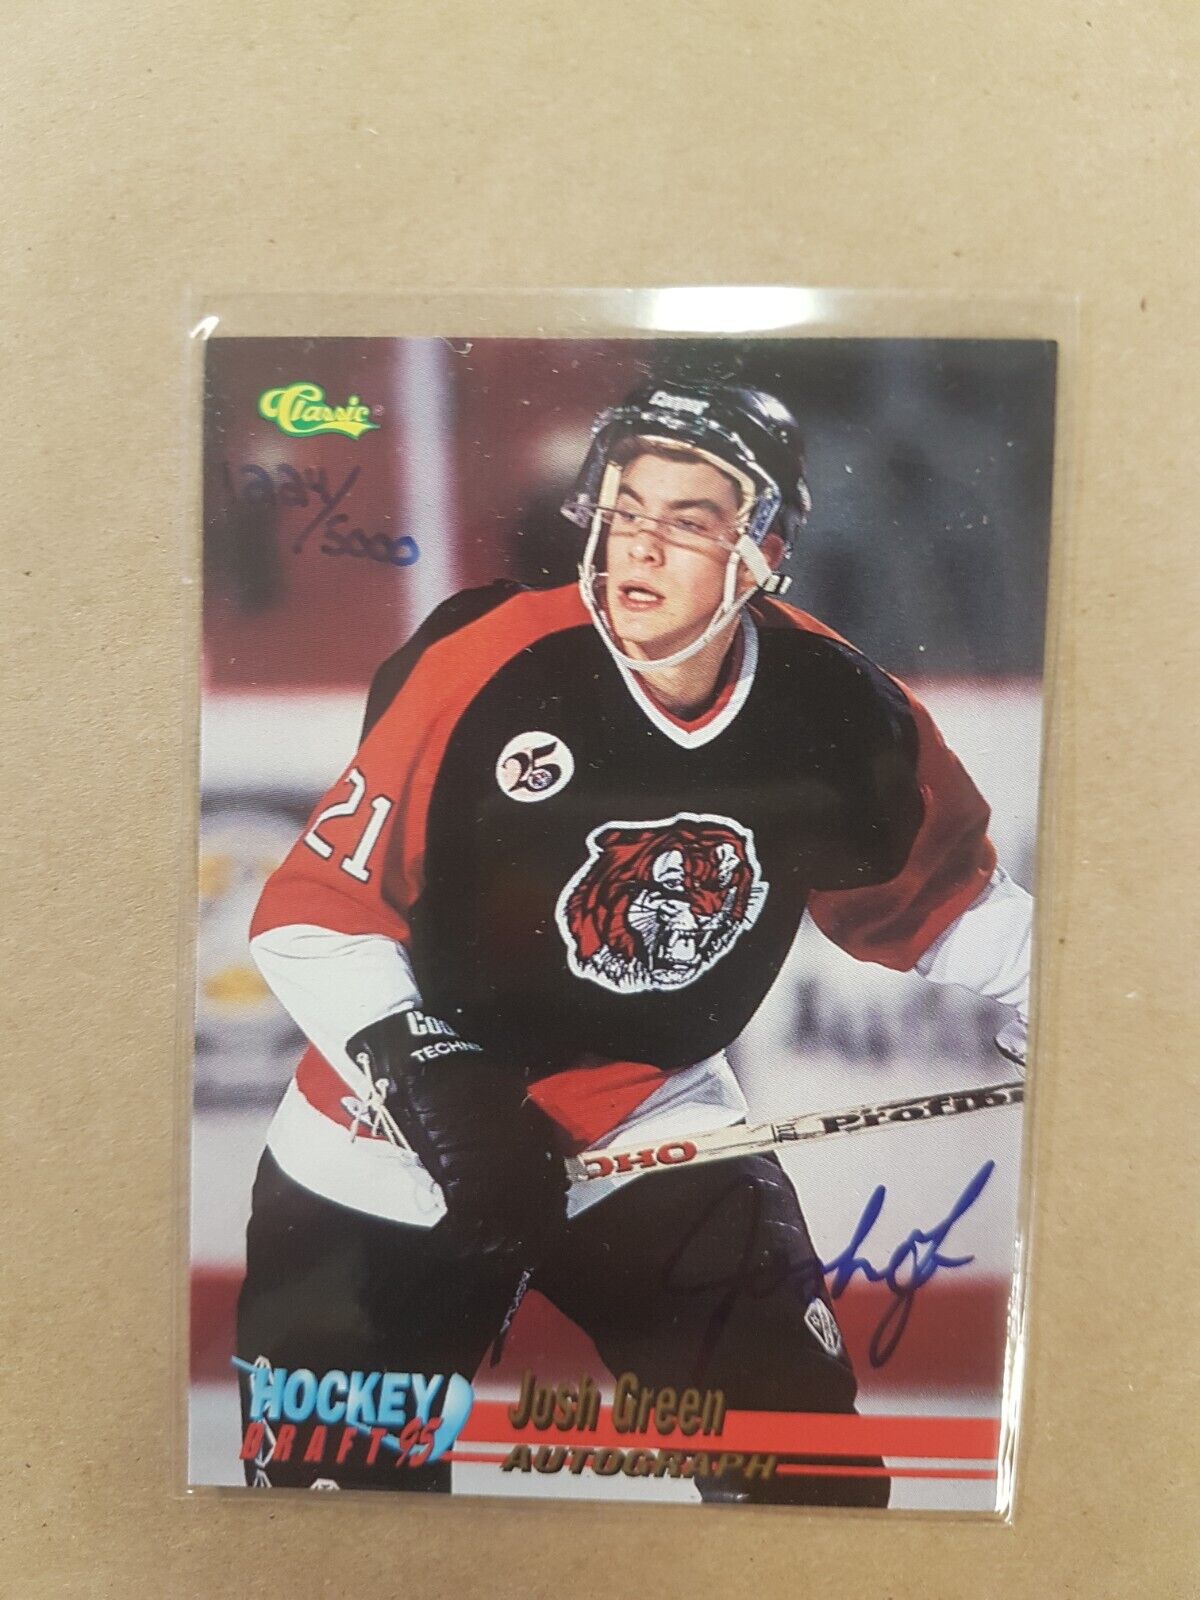 Josh Green Autograph Card Signed Hockey 1995